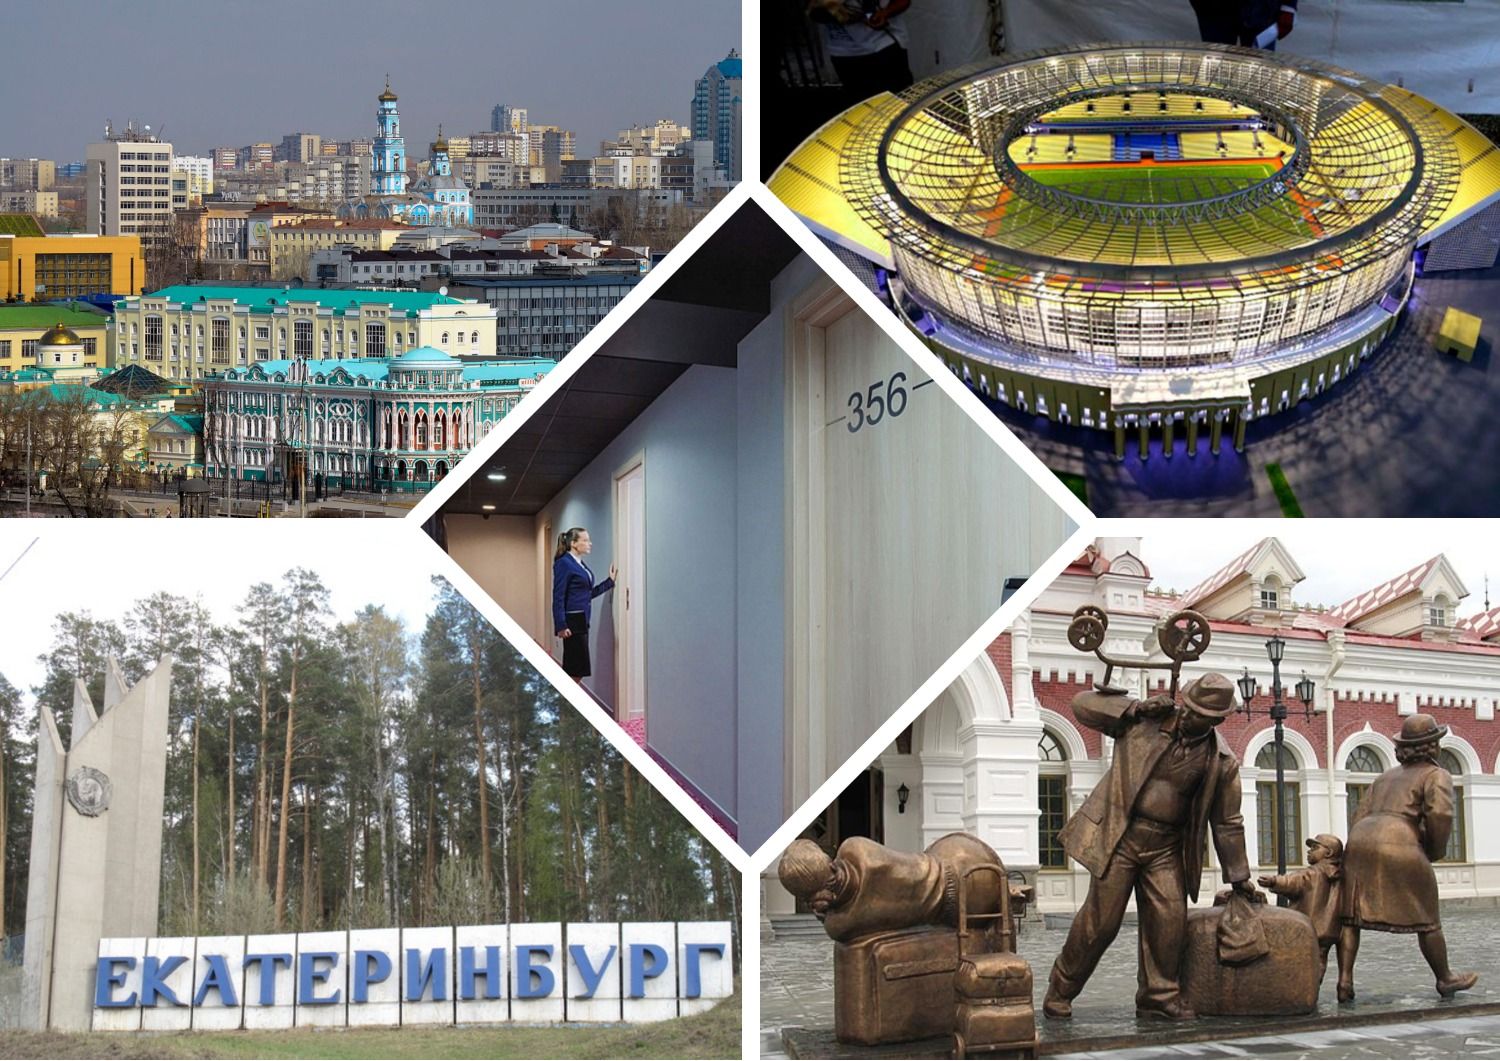 The best cheap hotels, hotels, hostels in Yekaterinburg in 2022